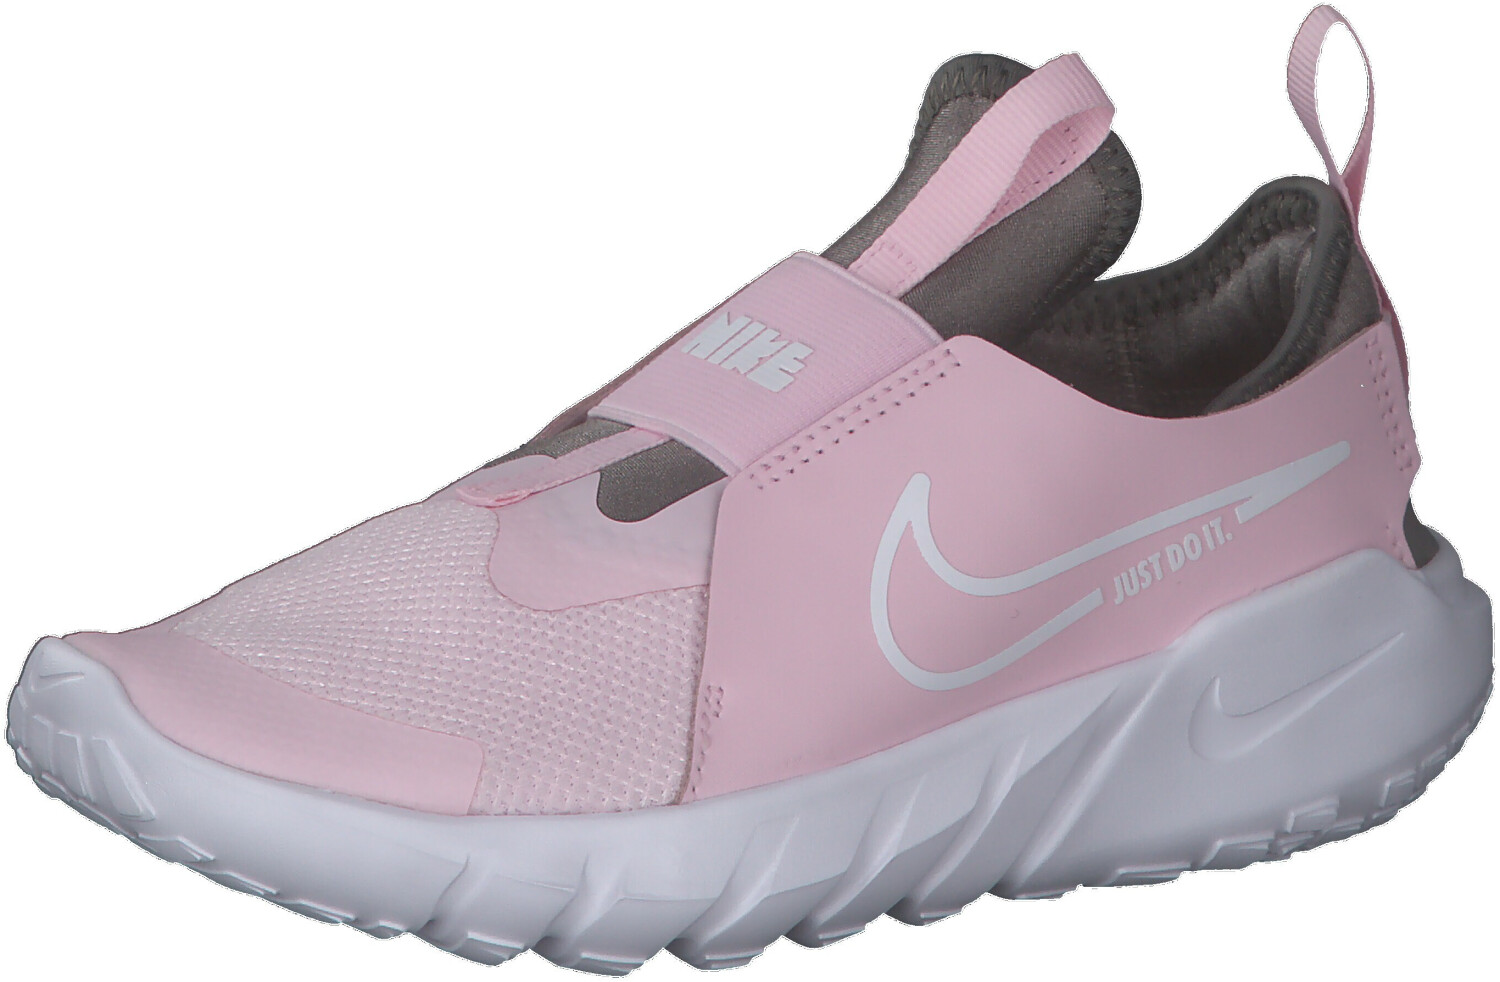 Nike Flex Runner 2 Kids pink foam/flat pewter/photo blue/white ab 27,99 € |  Preisvergleich bei